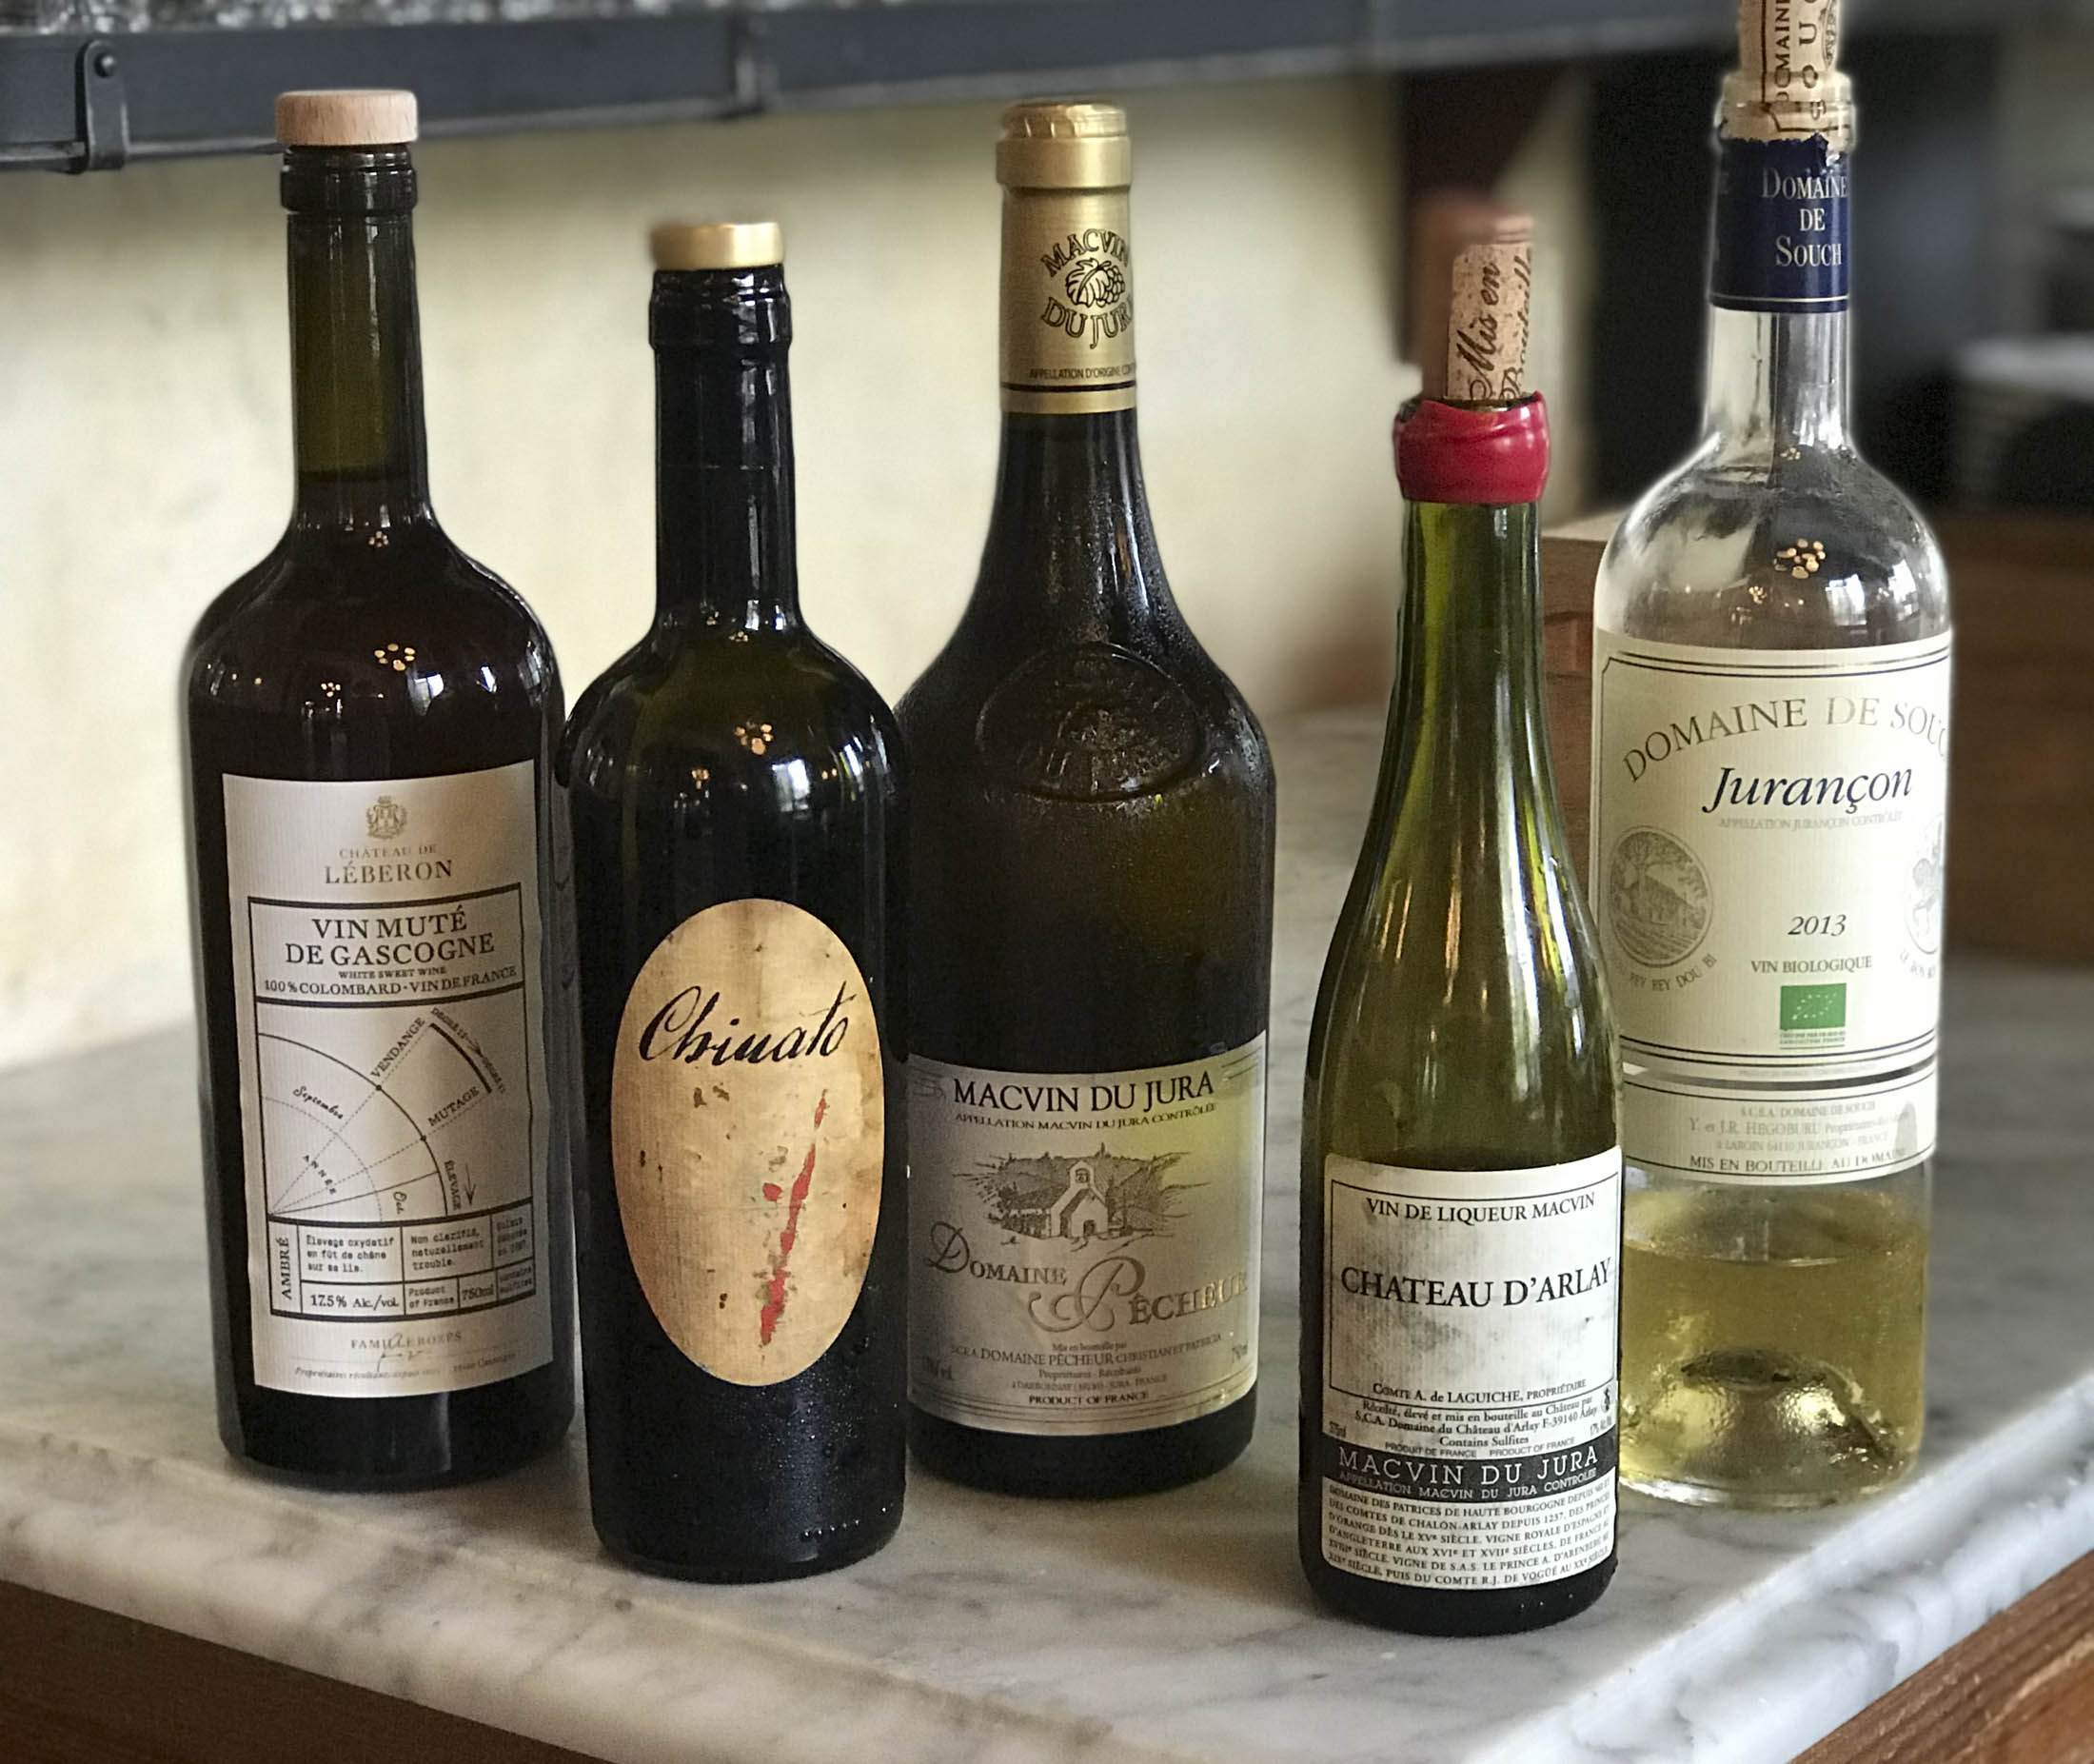 Dessert wines at Reynard&nbsp;in Brooklyn. Pricing is by the glass (3 oz.), gratuity included: Château de Léberon Vin Muté de Gascogne ($15), Vergano Chinato ($18), , Domaine Pêcheur Macvin blanc ($17), Château d’Arlay Macvin rouge ($16),&nbsp;Domaine de Souch Jurançon ($15).